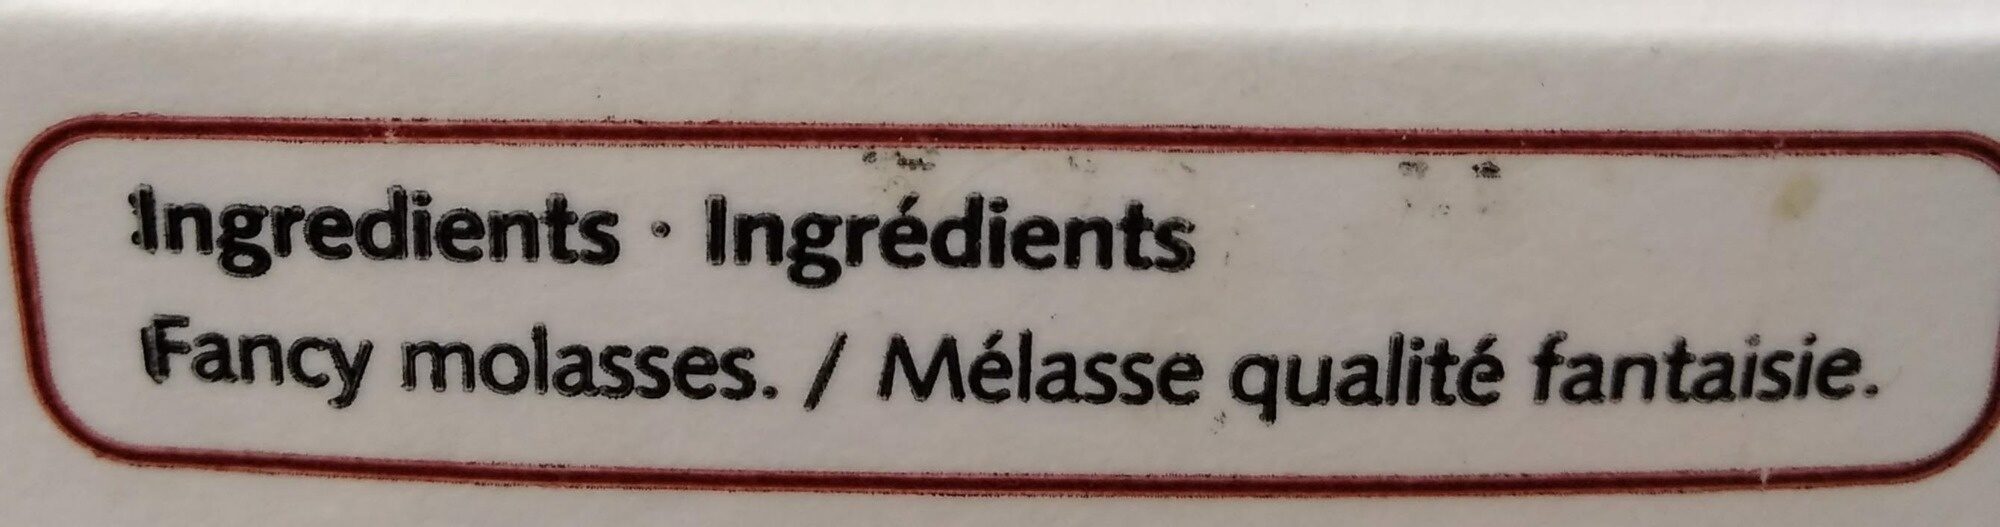 Fancy molasses - Ingredients